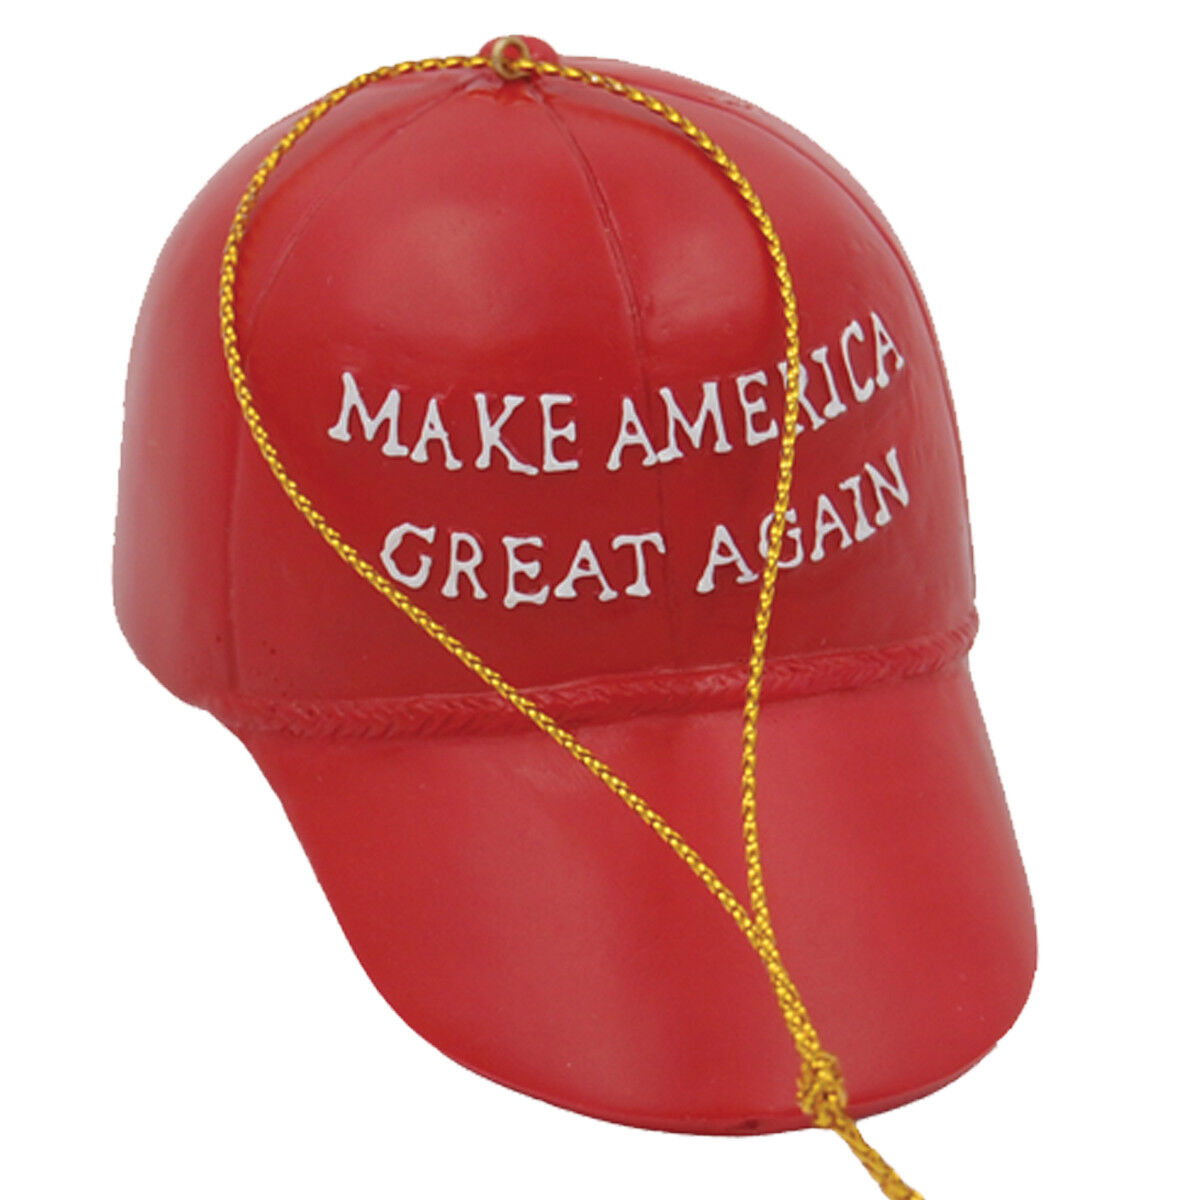 My Little Town Donald Trump Ornament MAGA hat